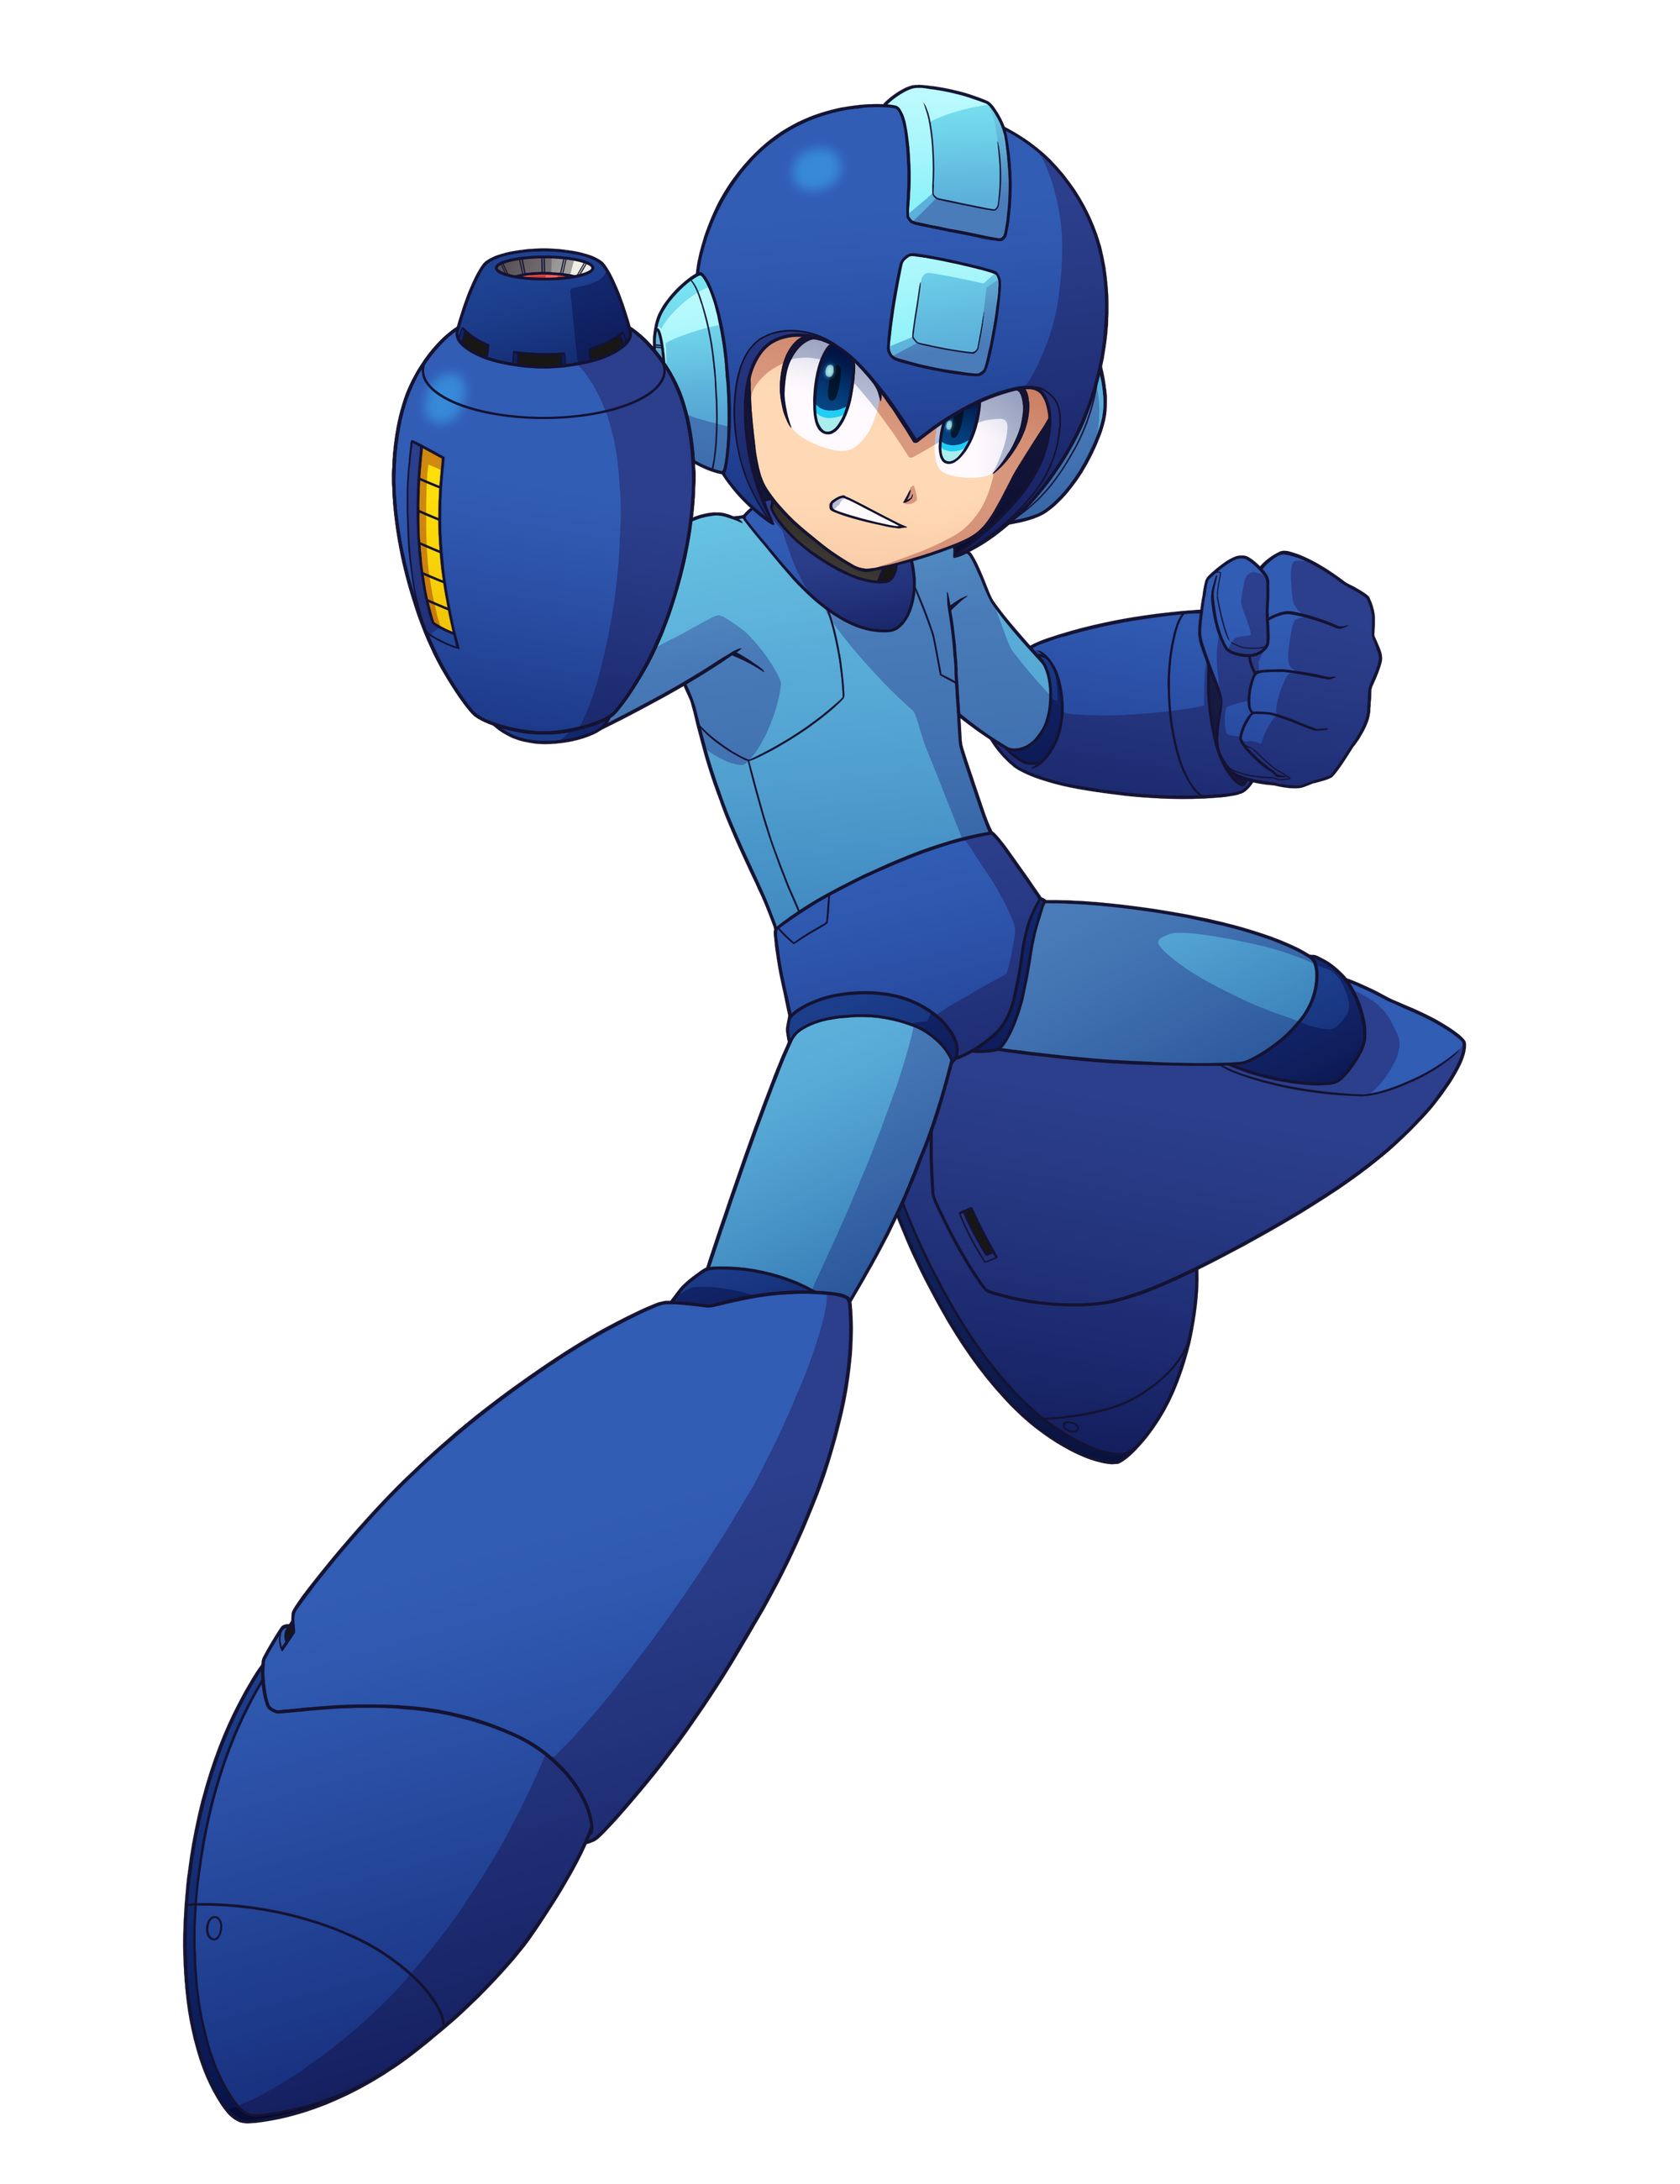 Mega Man x Shovel Knight Mega Man by SpeakoniaAndy on DeviantArt